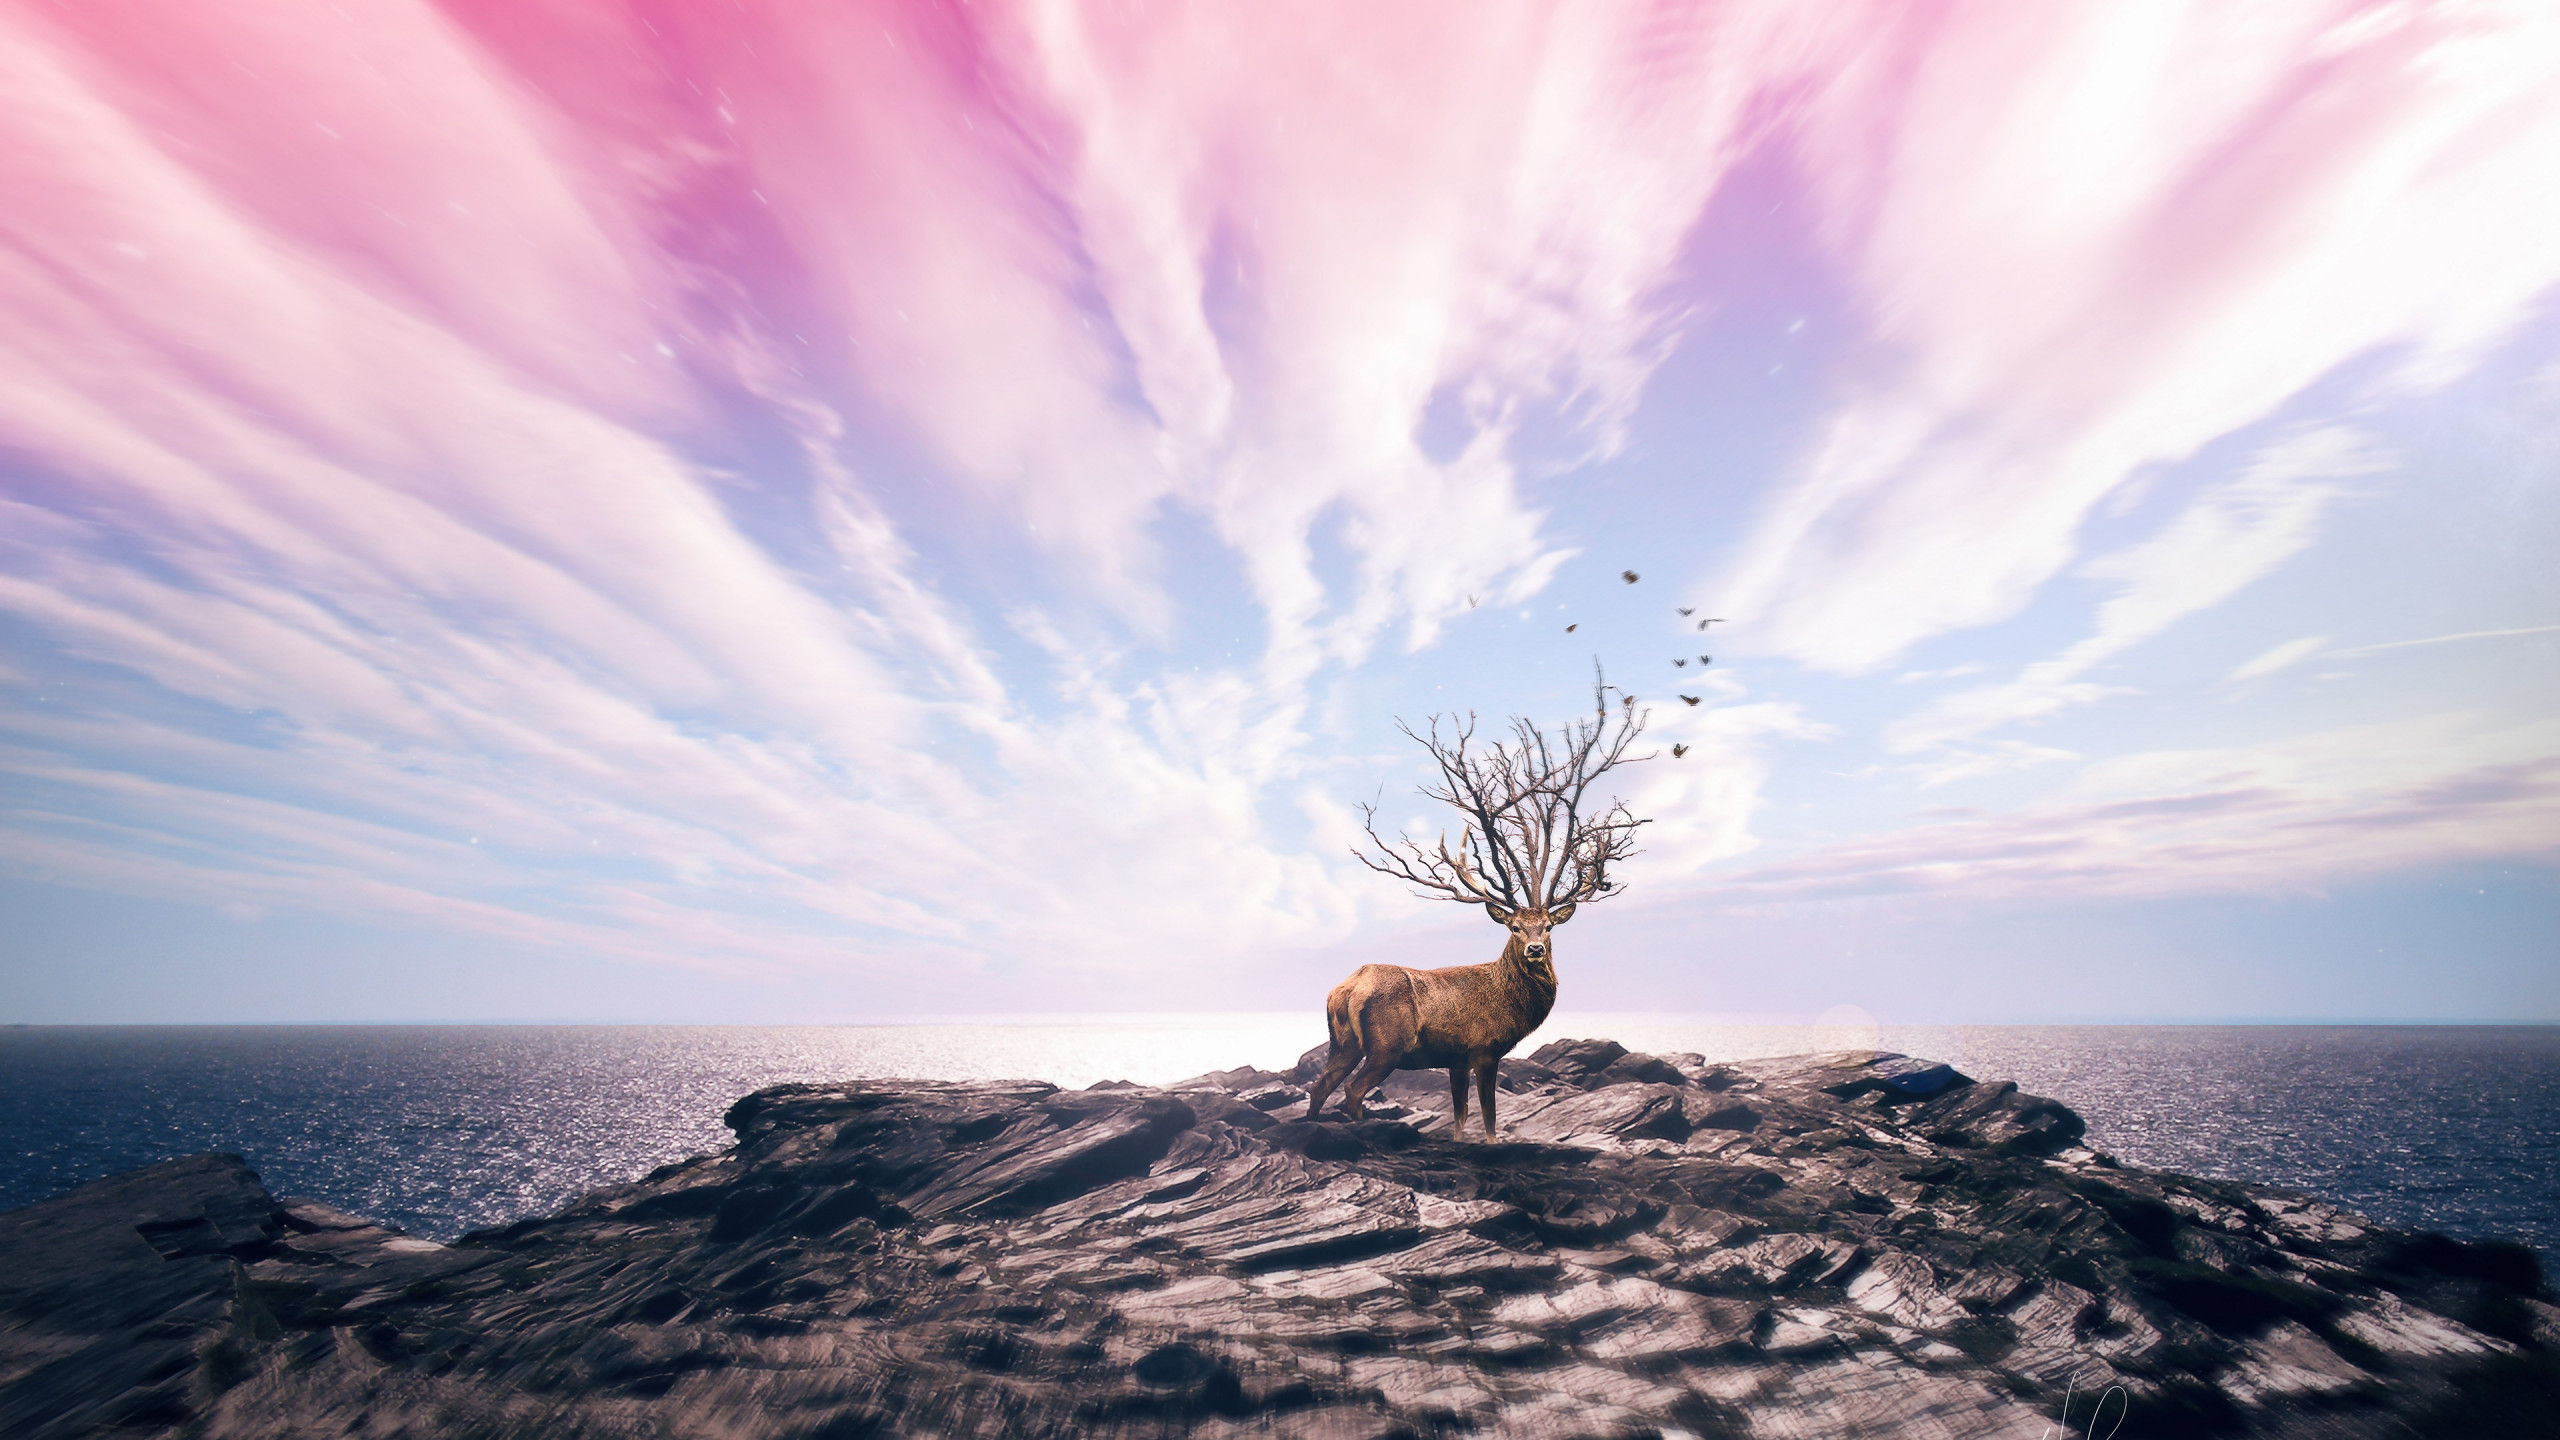 Digital art with deer wallpaper 2560x1440